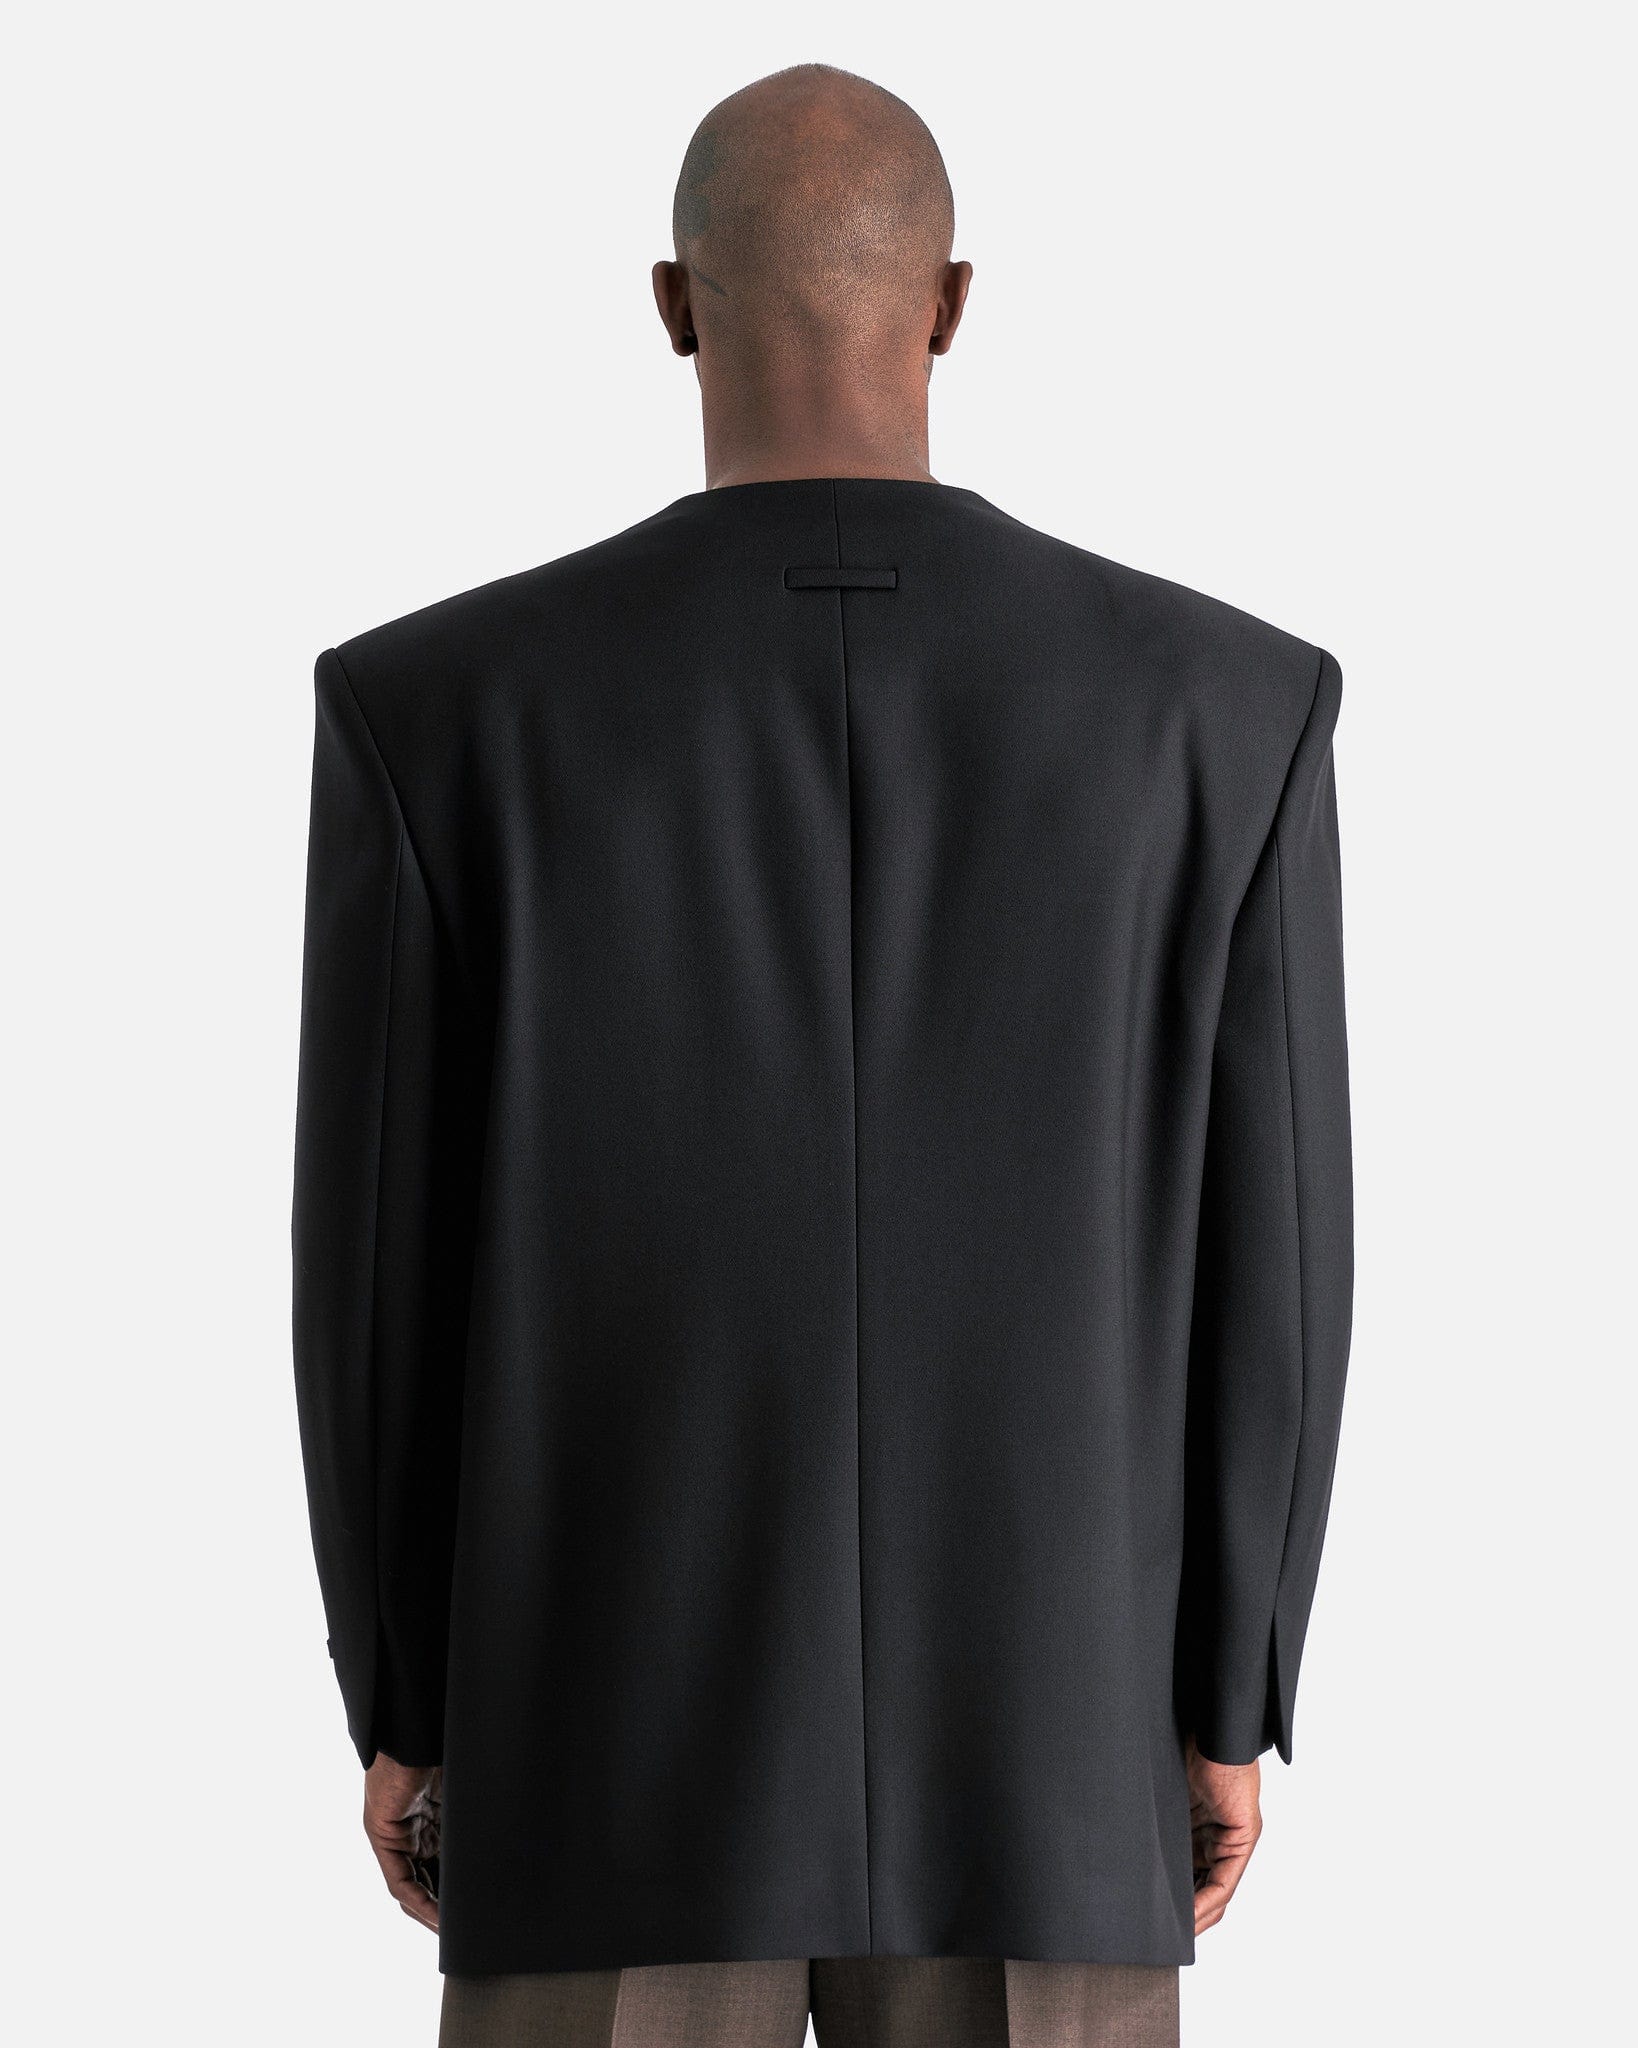 Fear of God Men's Jackets Lapelless Suit Jacket in Black